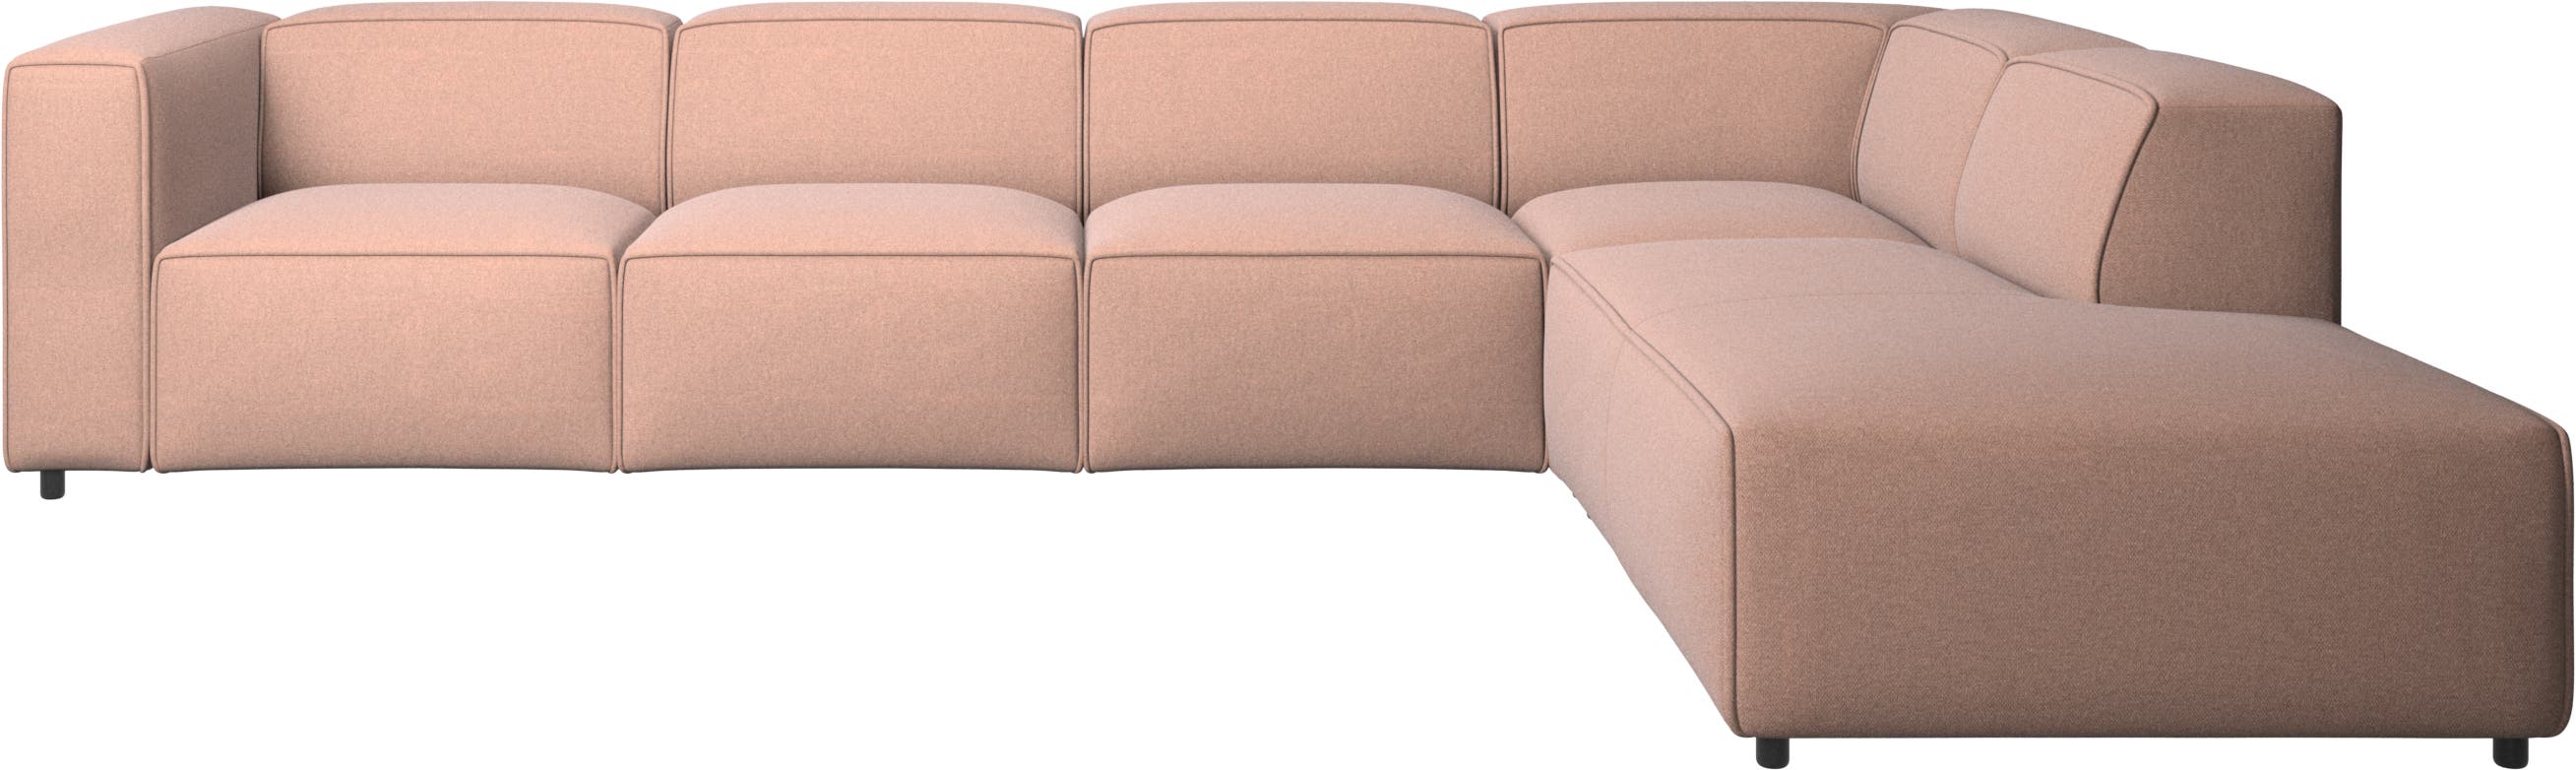 Carmo corner sofa with lounging unit